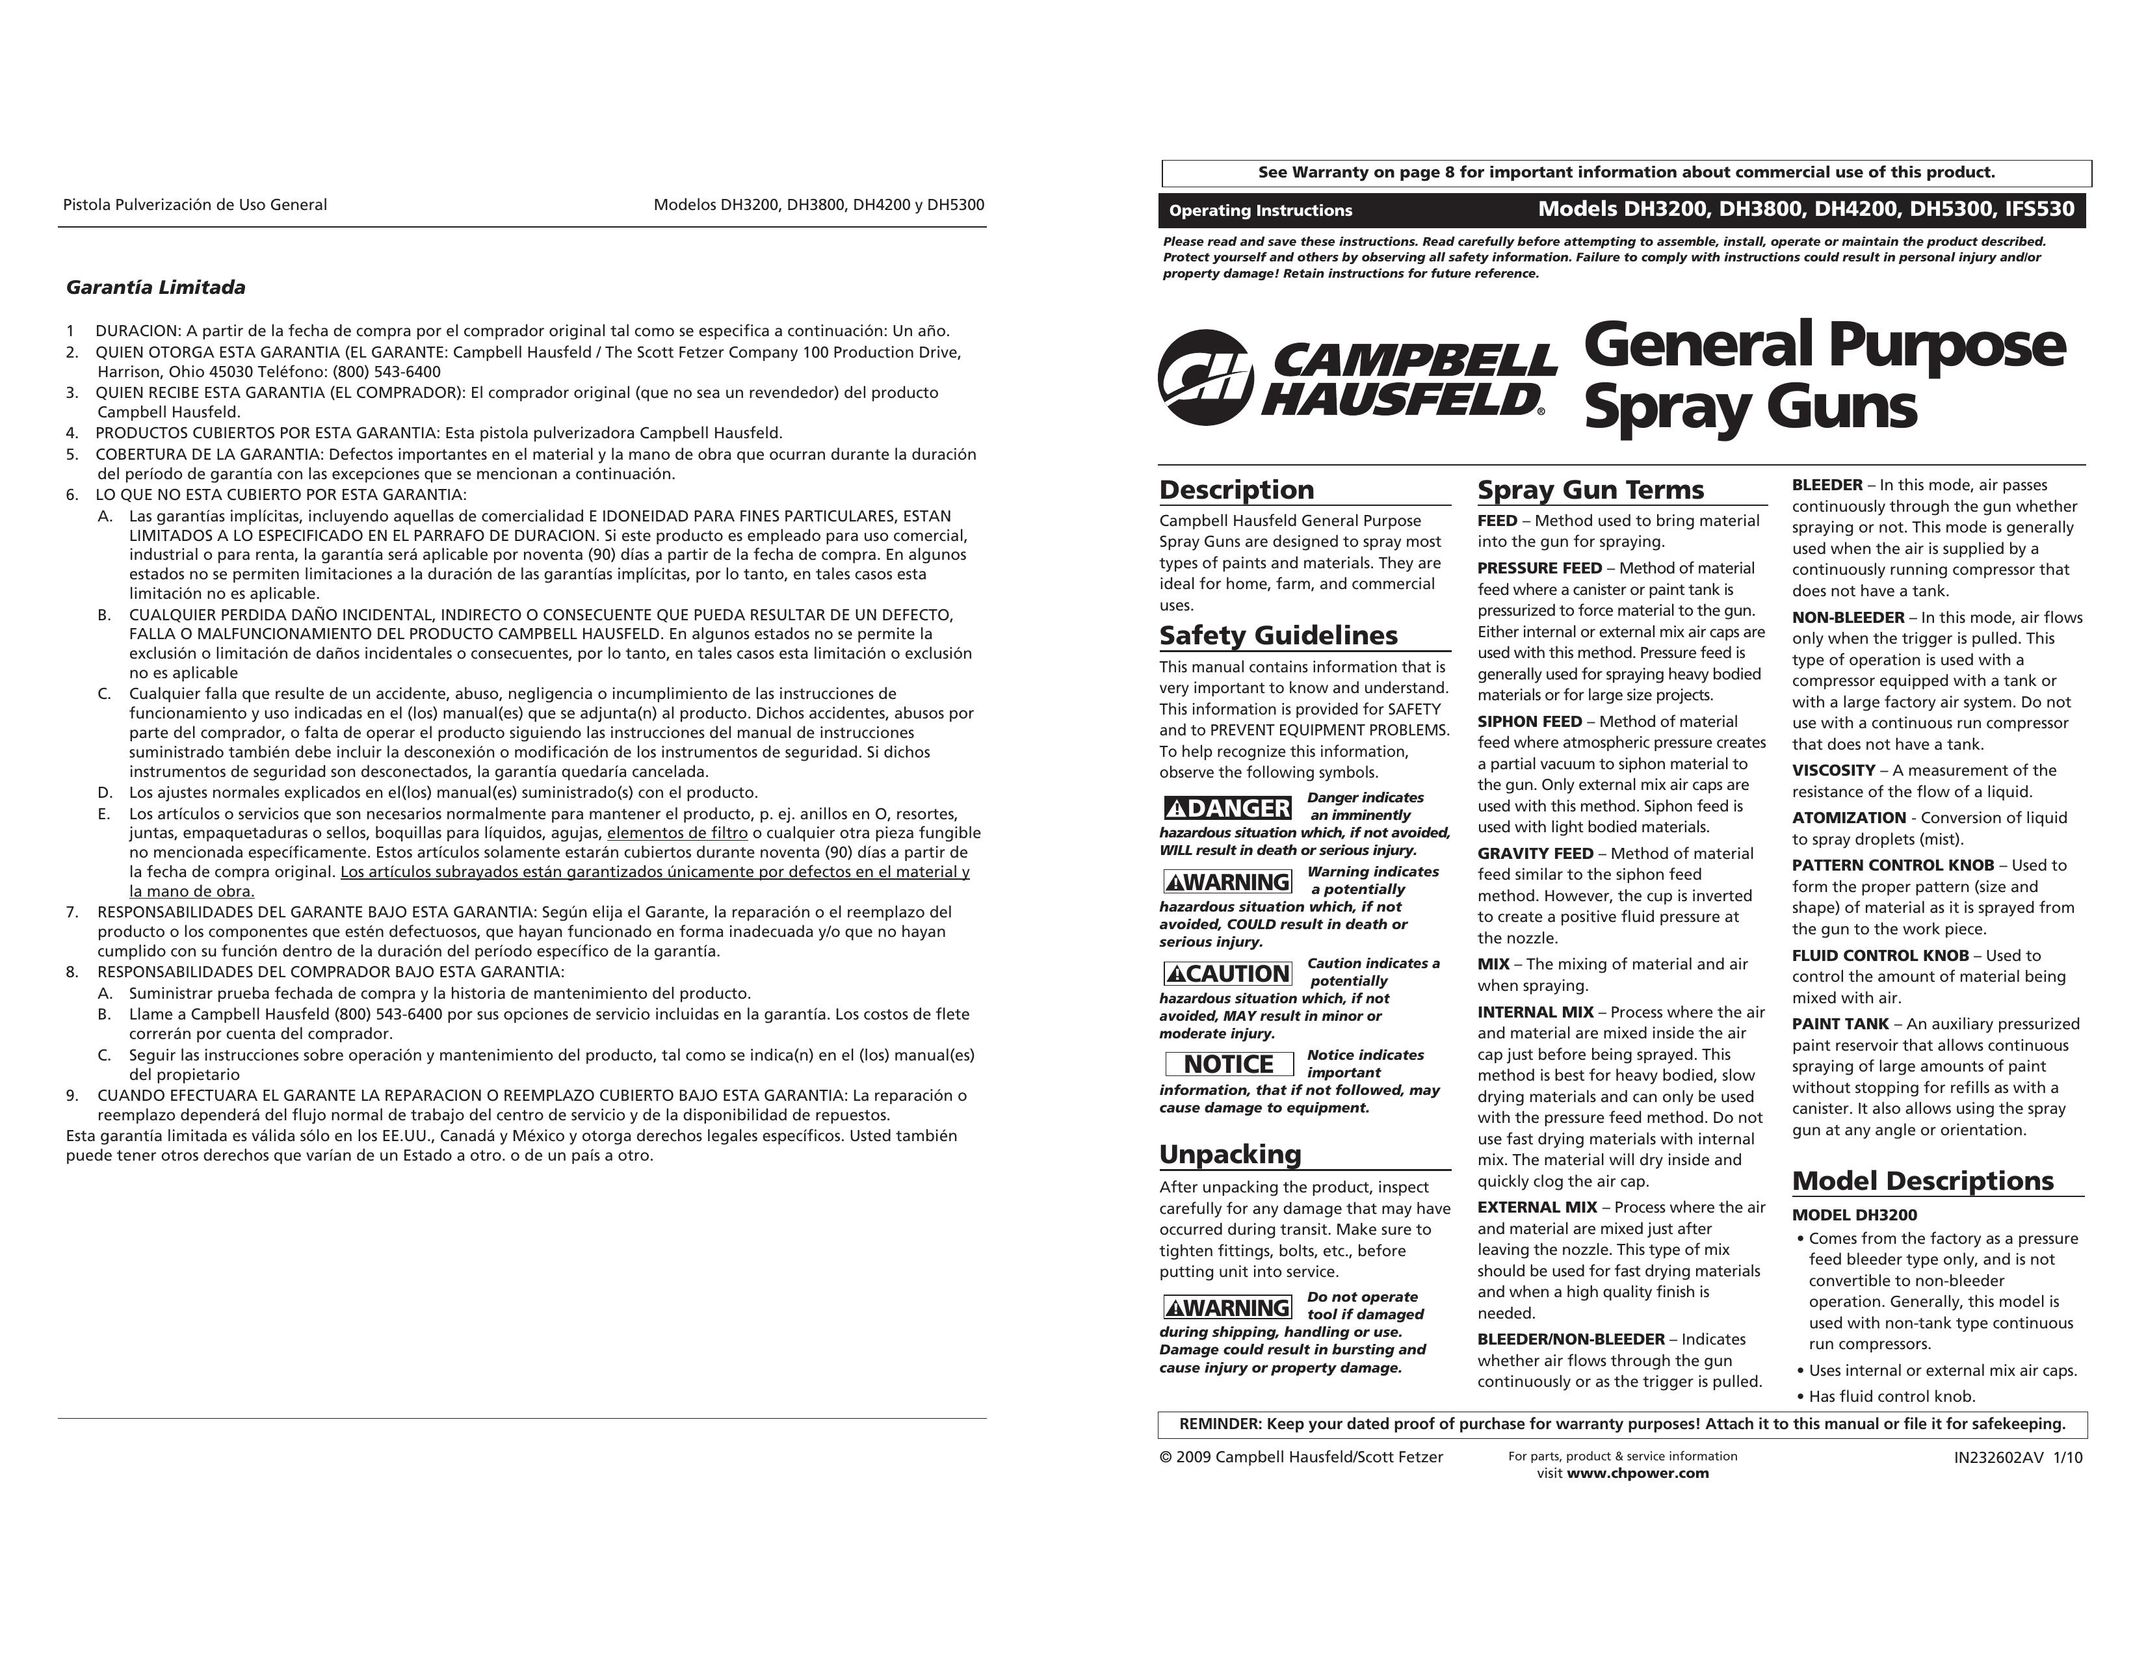 Campbell Hausfeld DH5300 Paint Sprayer User Manual